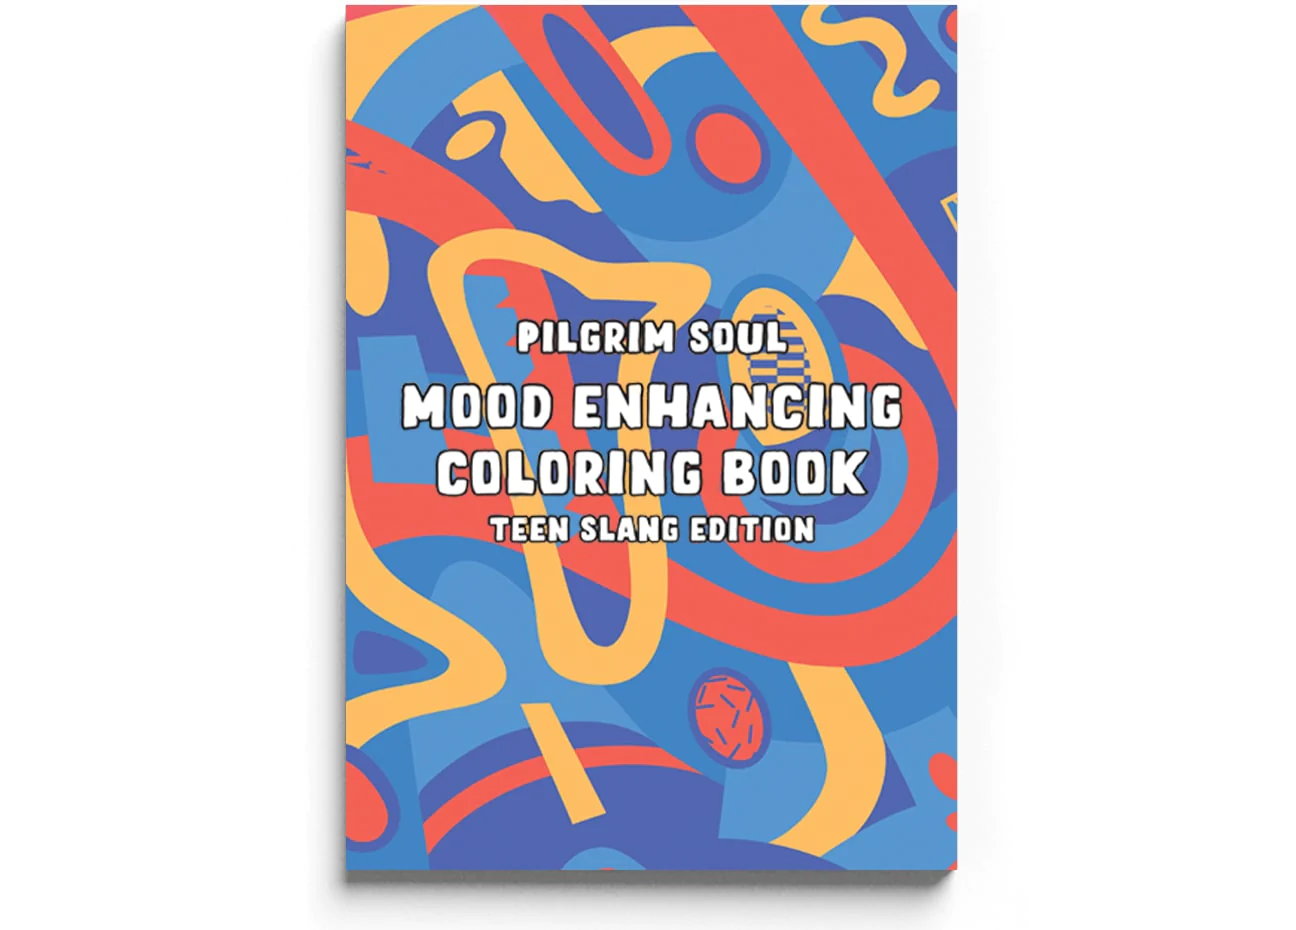 Complete Adult Coloring Book Bundle: Vol 1 + 2 + 3 + Pencils